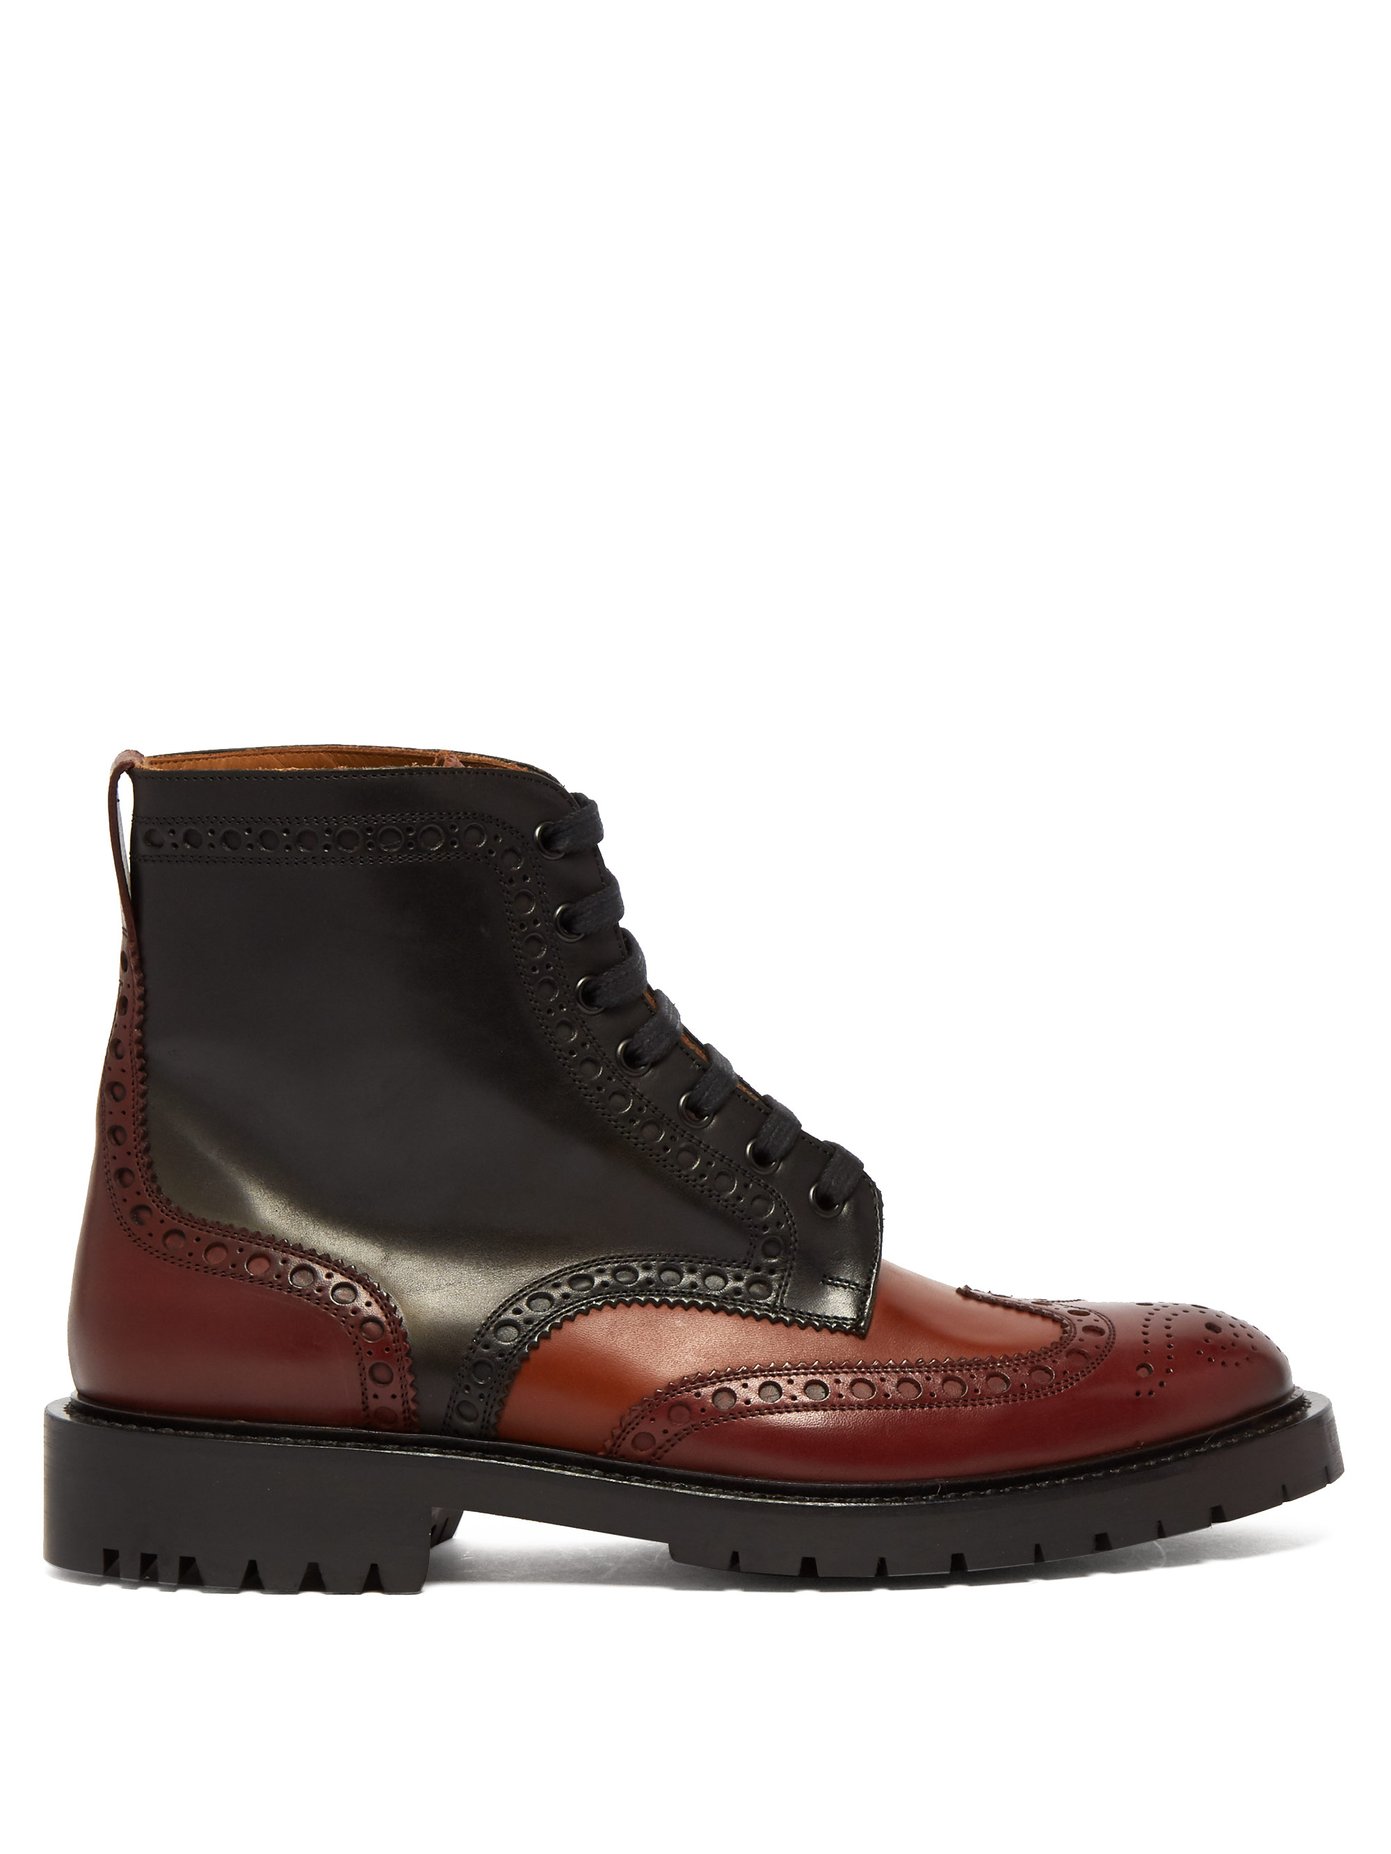 burberry brogue boots